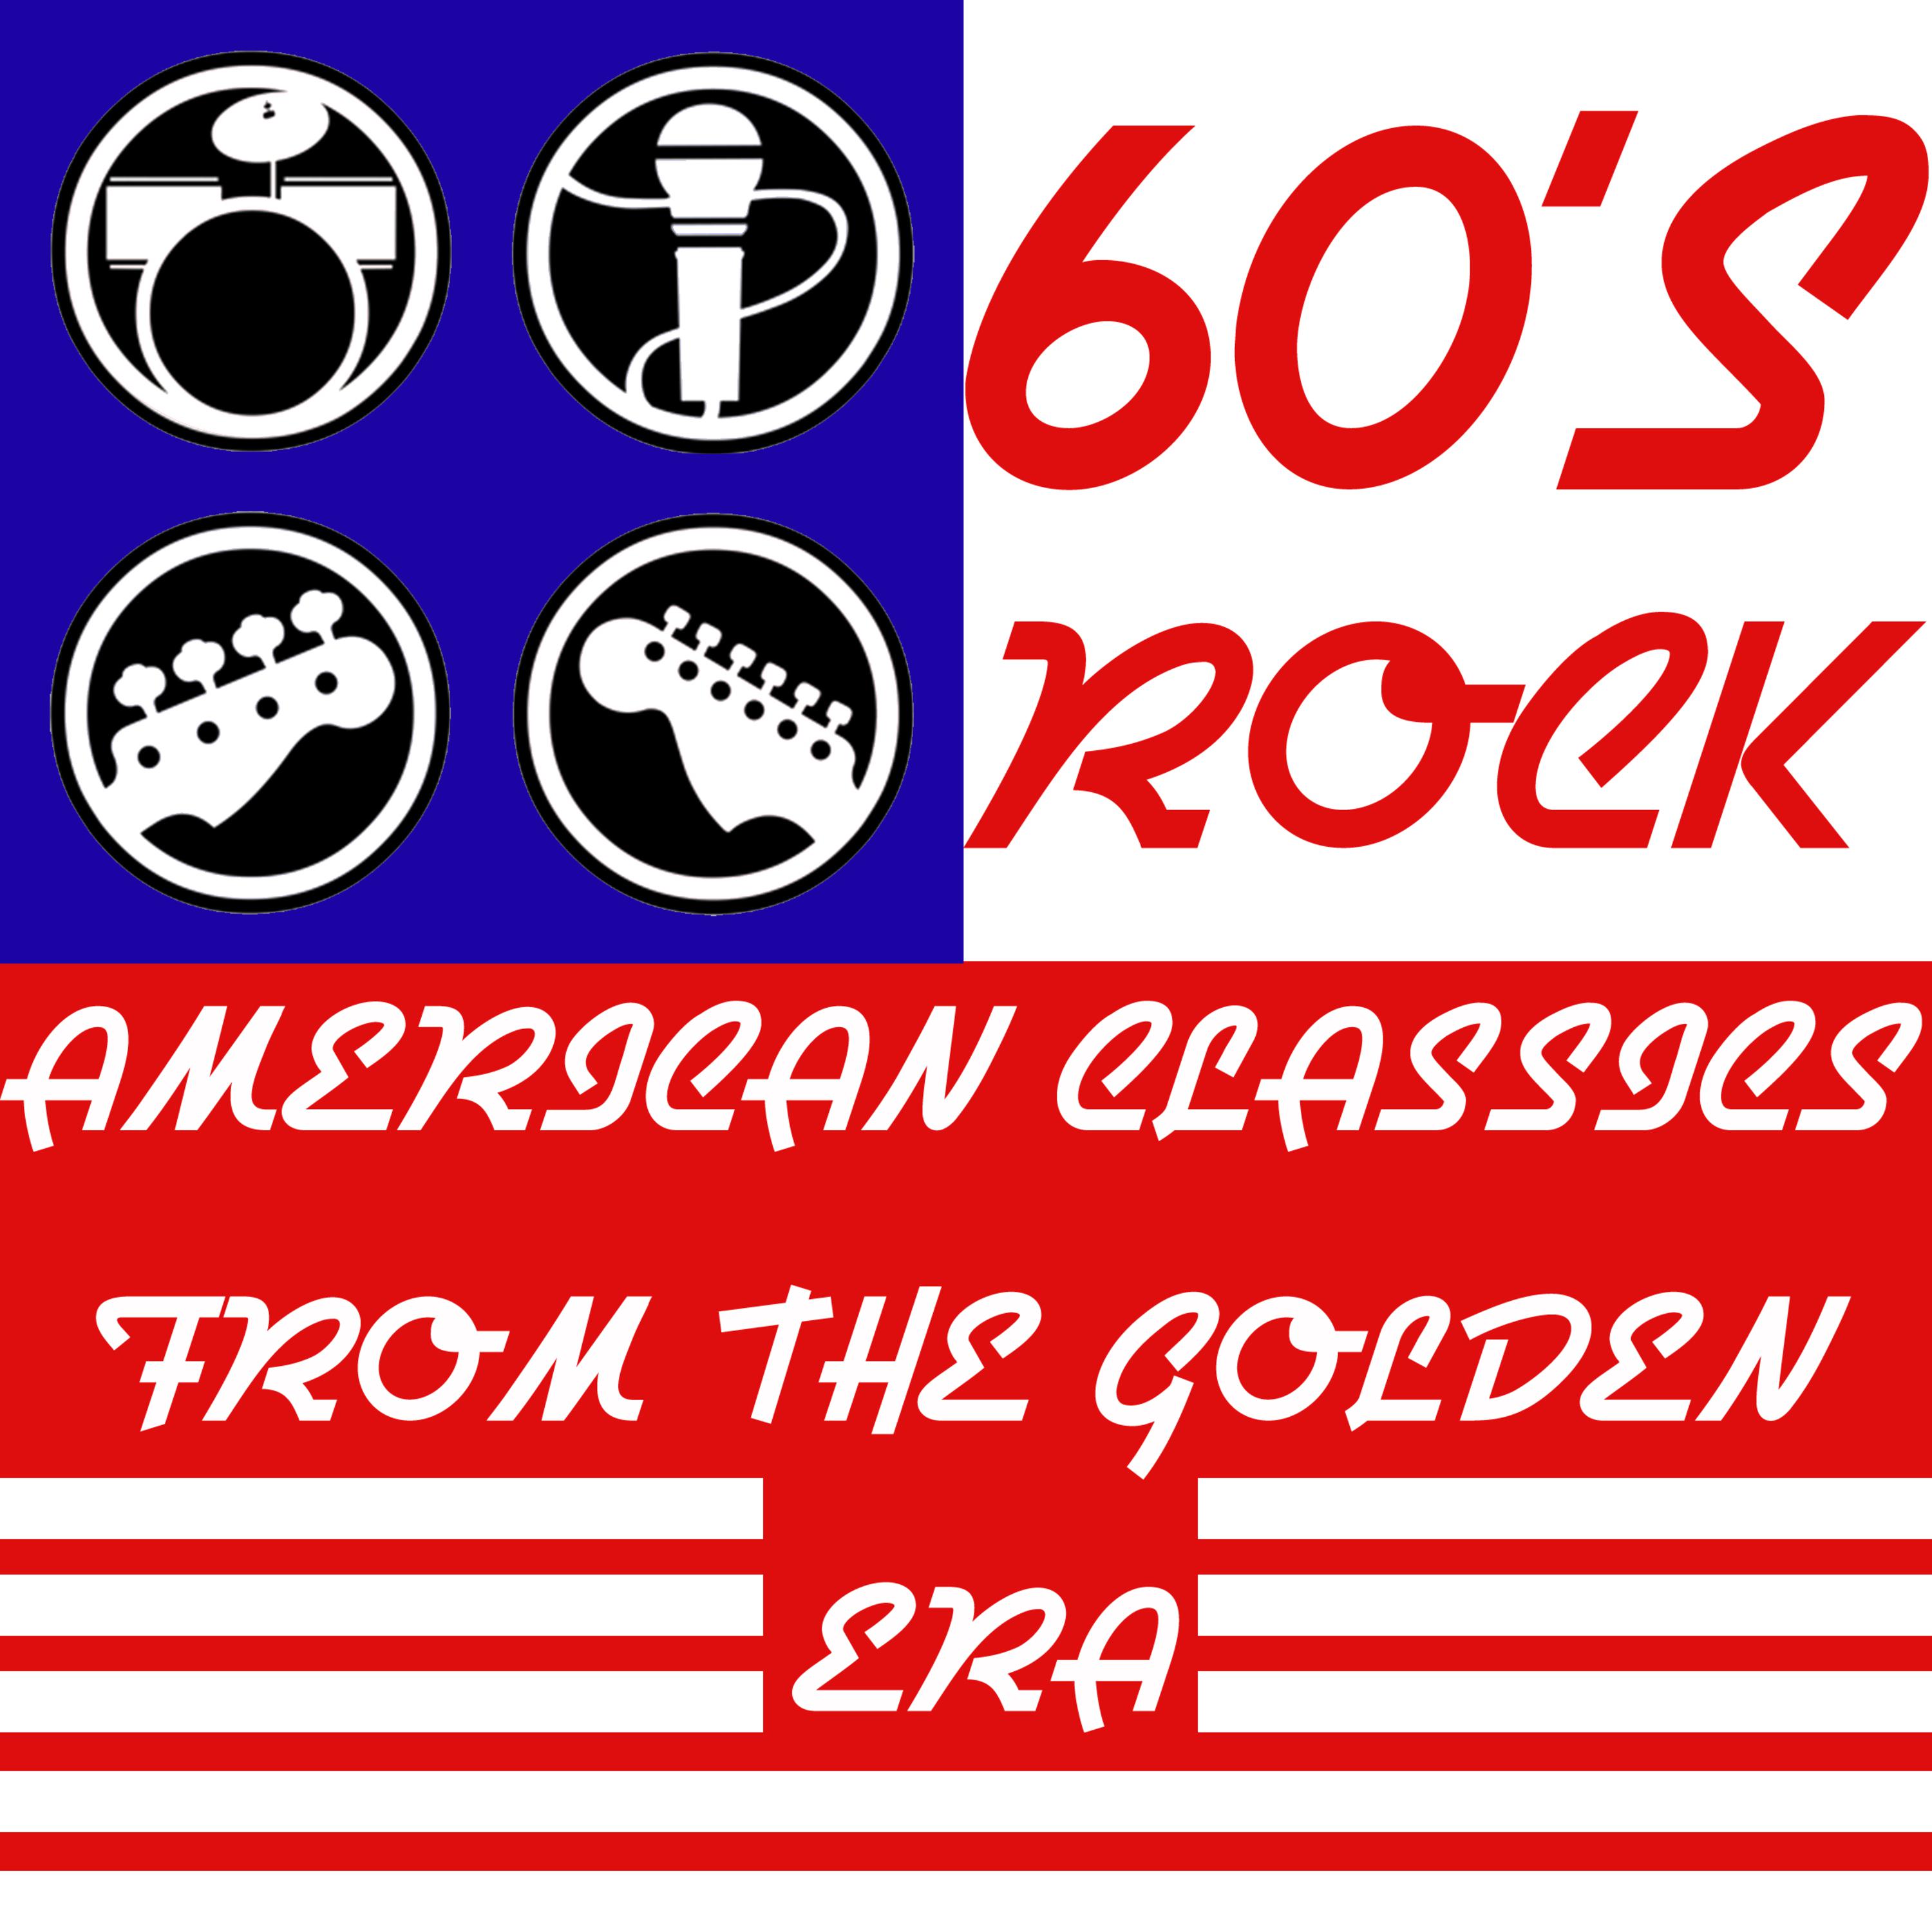 60s Rock - American Classics From The Golden Era